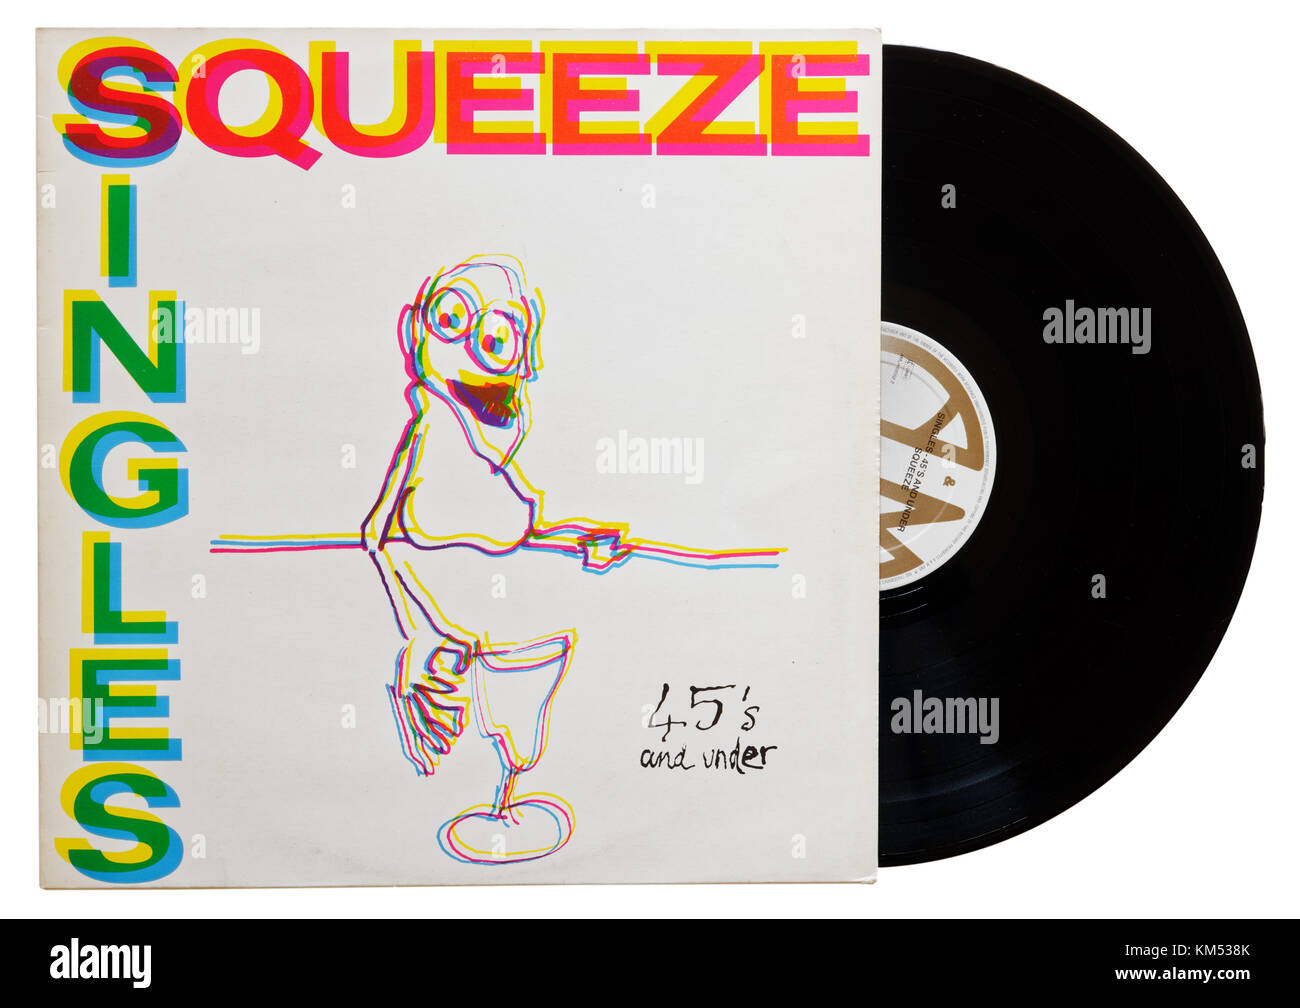 Squeeze 45 s und unter singles Compilation Album Stockfoto